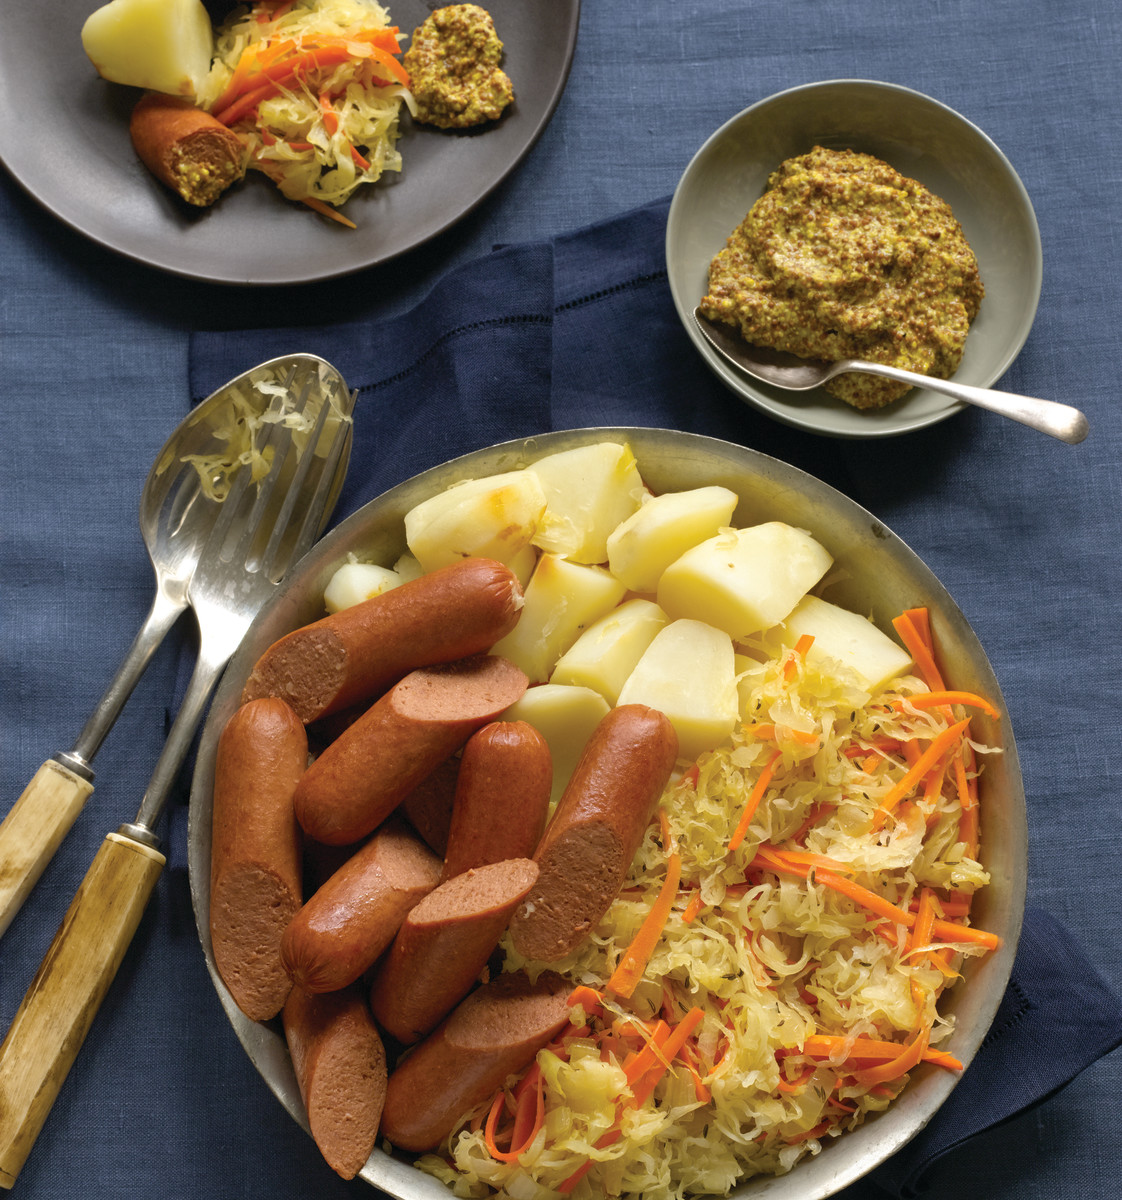 Knockwurst with Sauerkraut and Potatoes